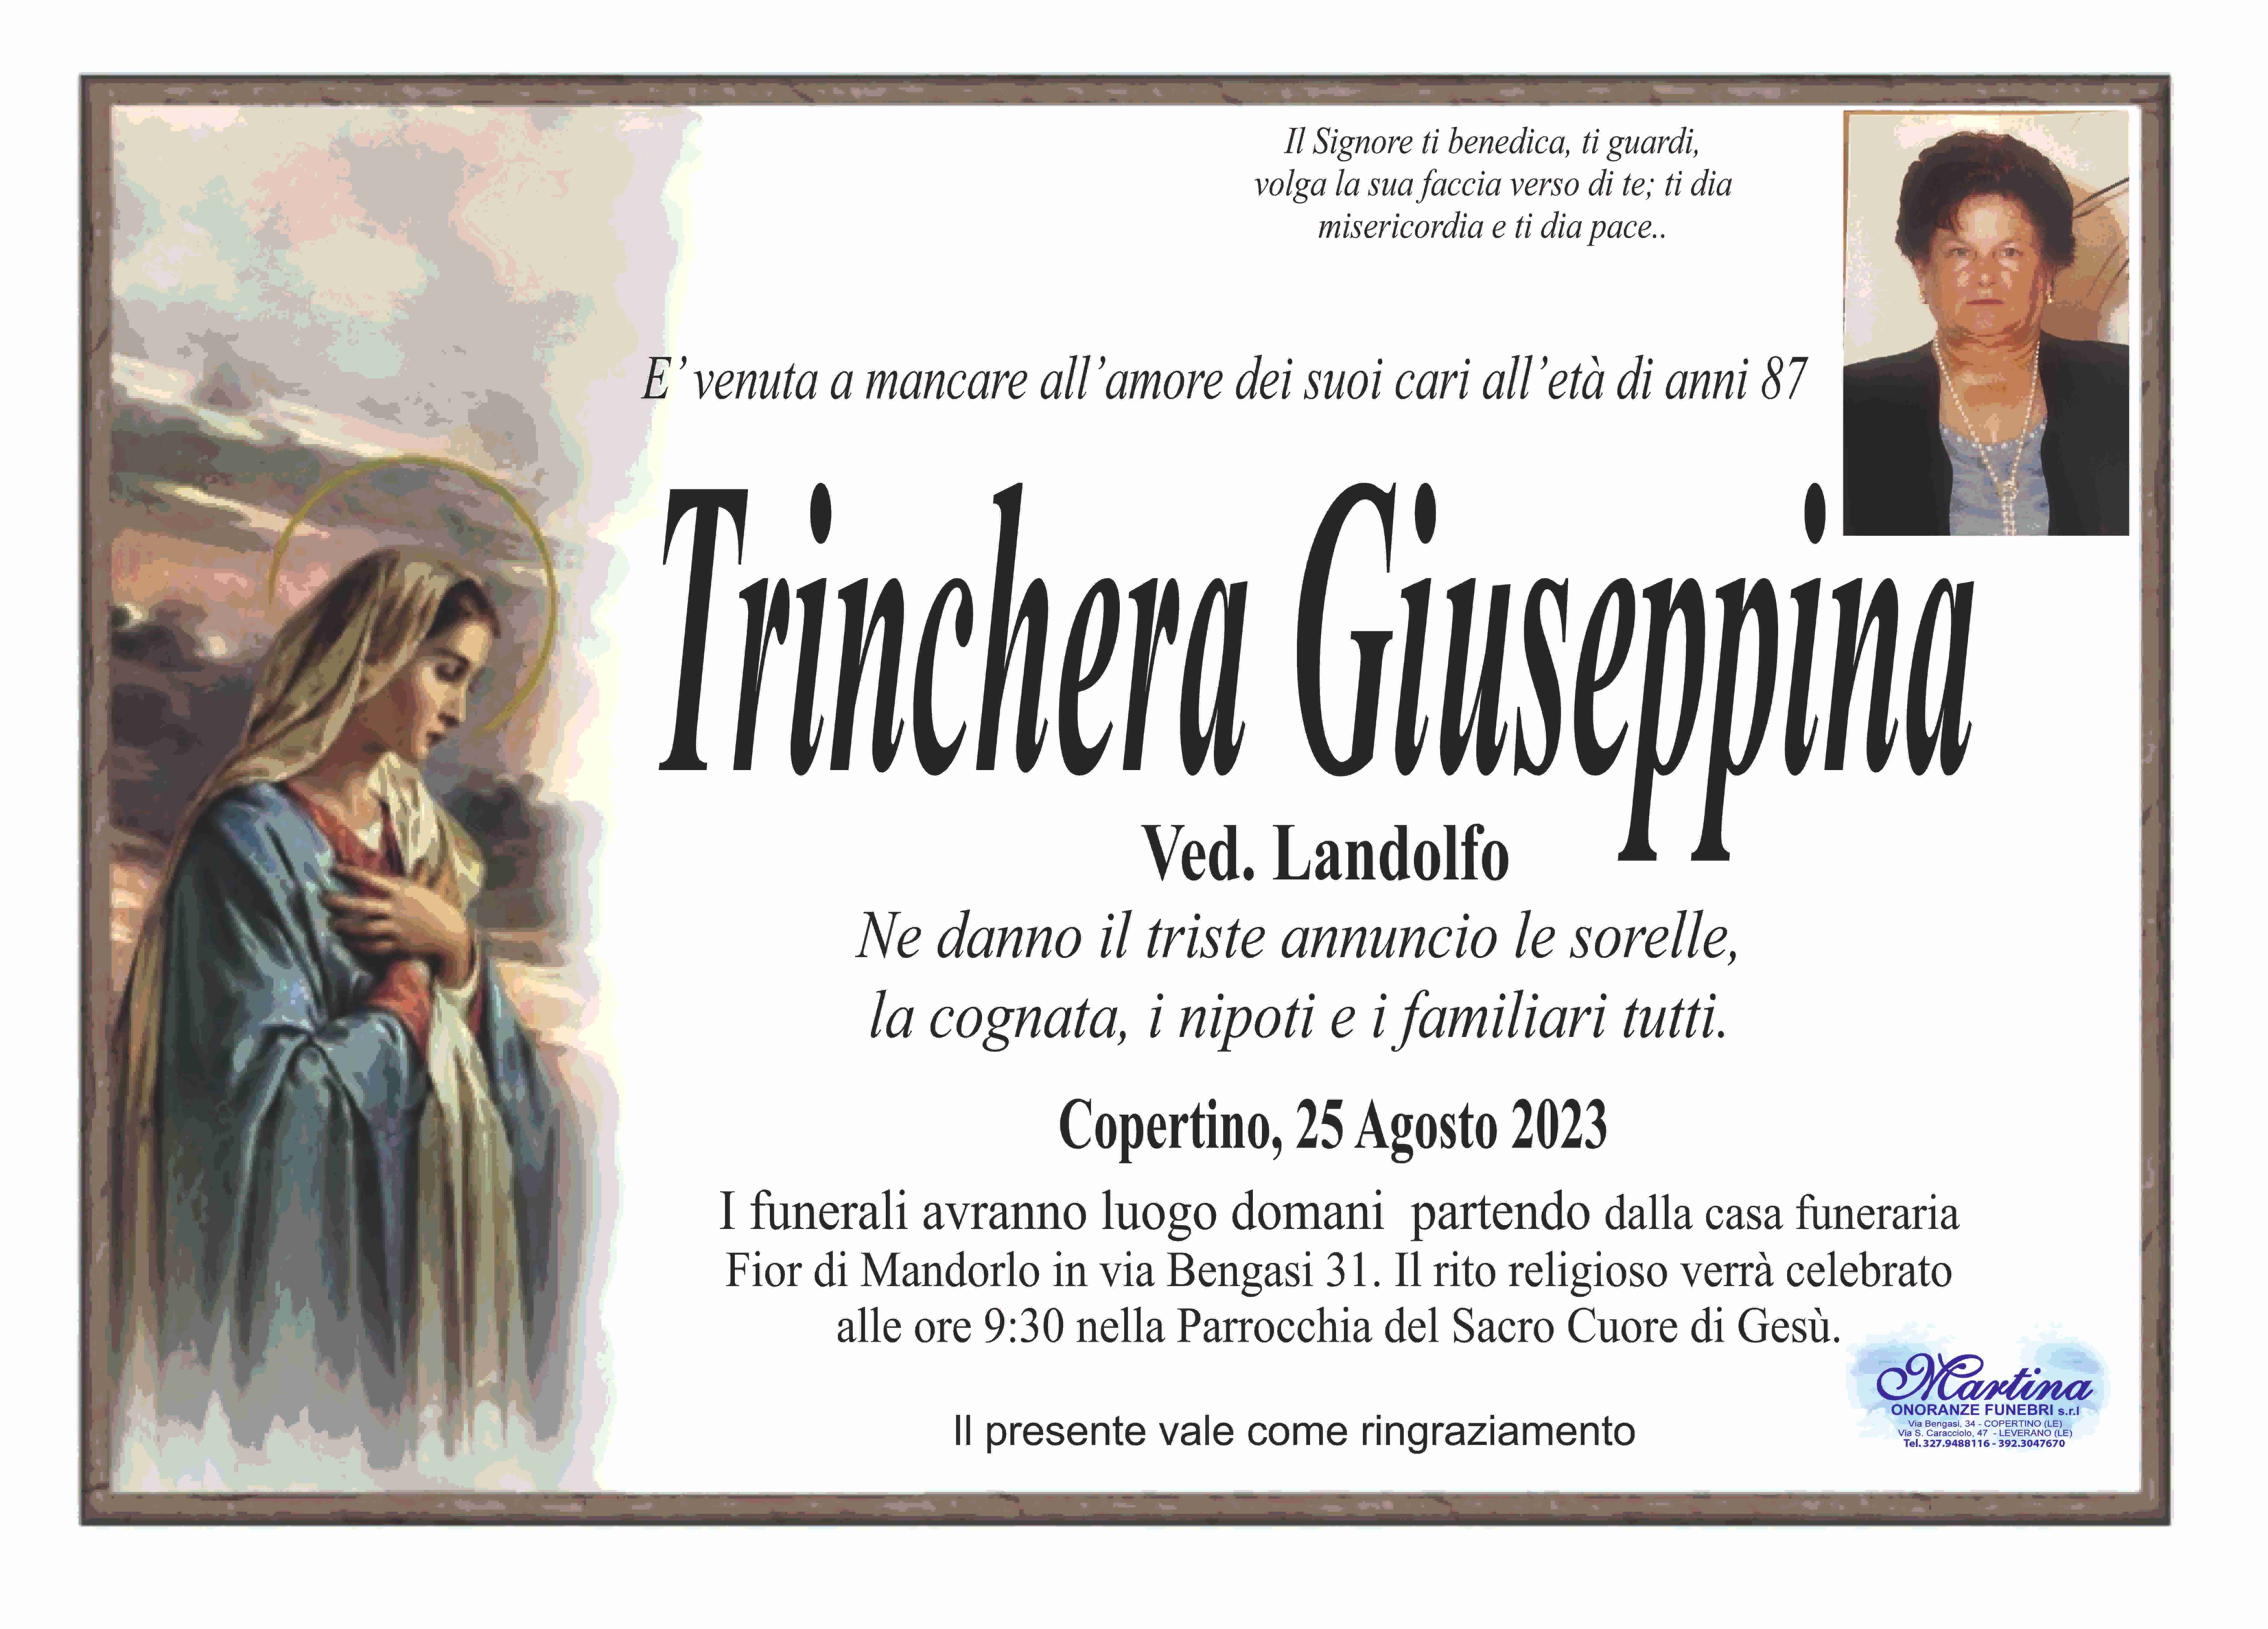 Giuseppina Trinchera